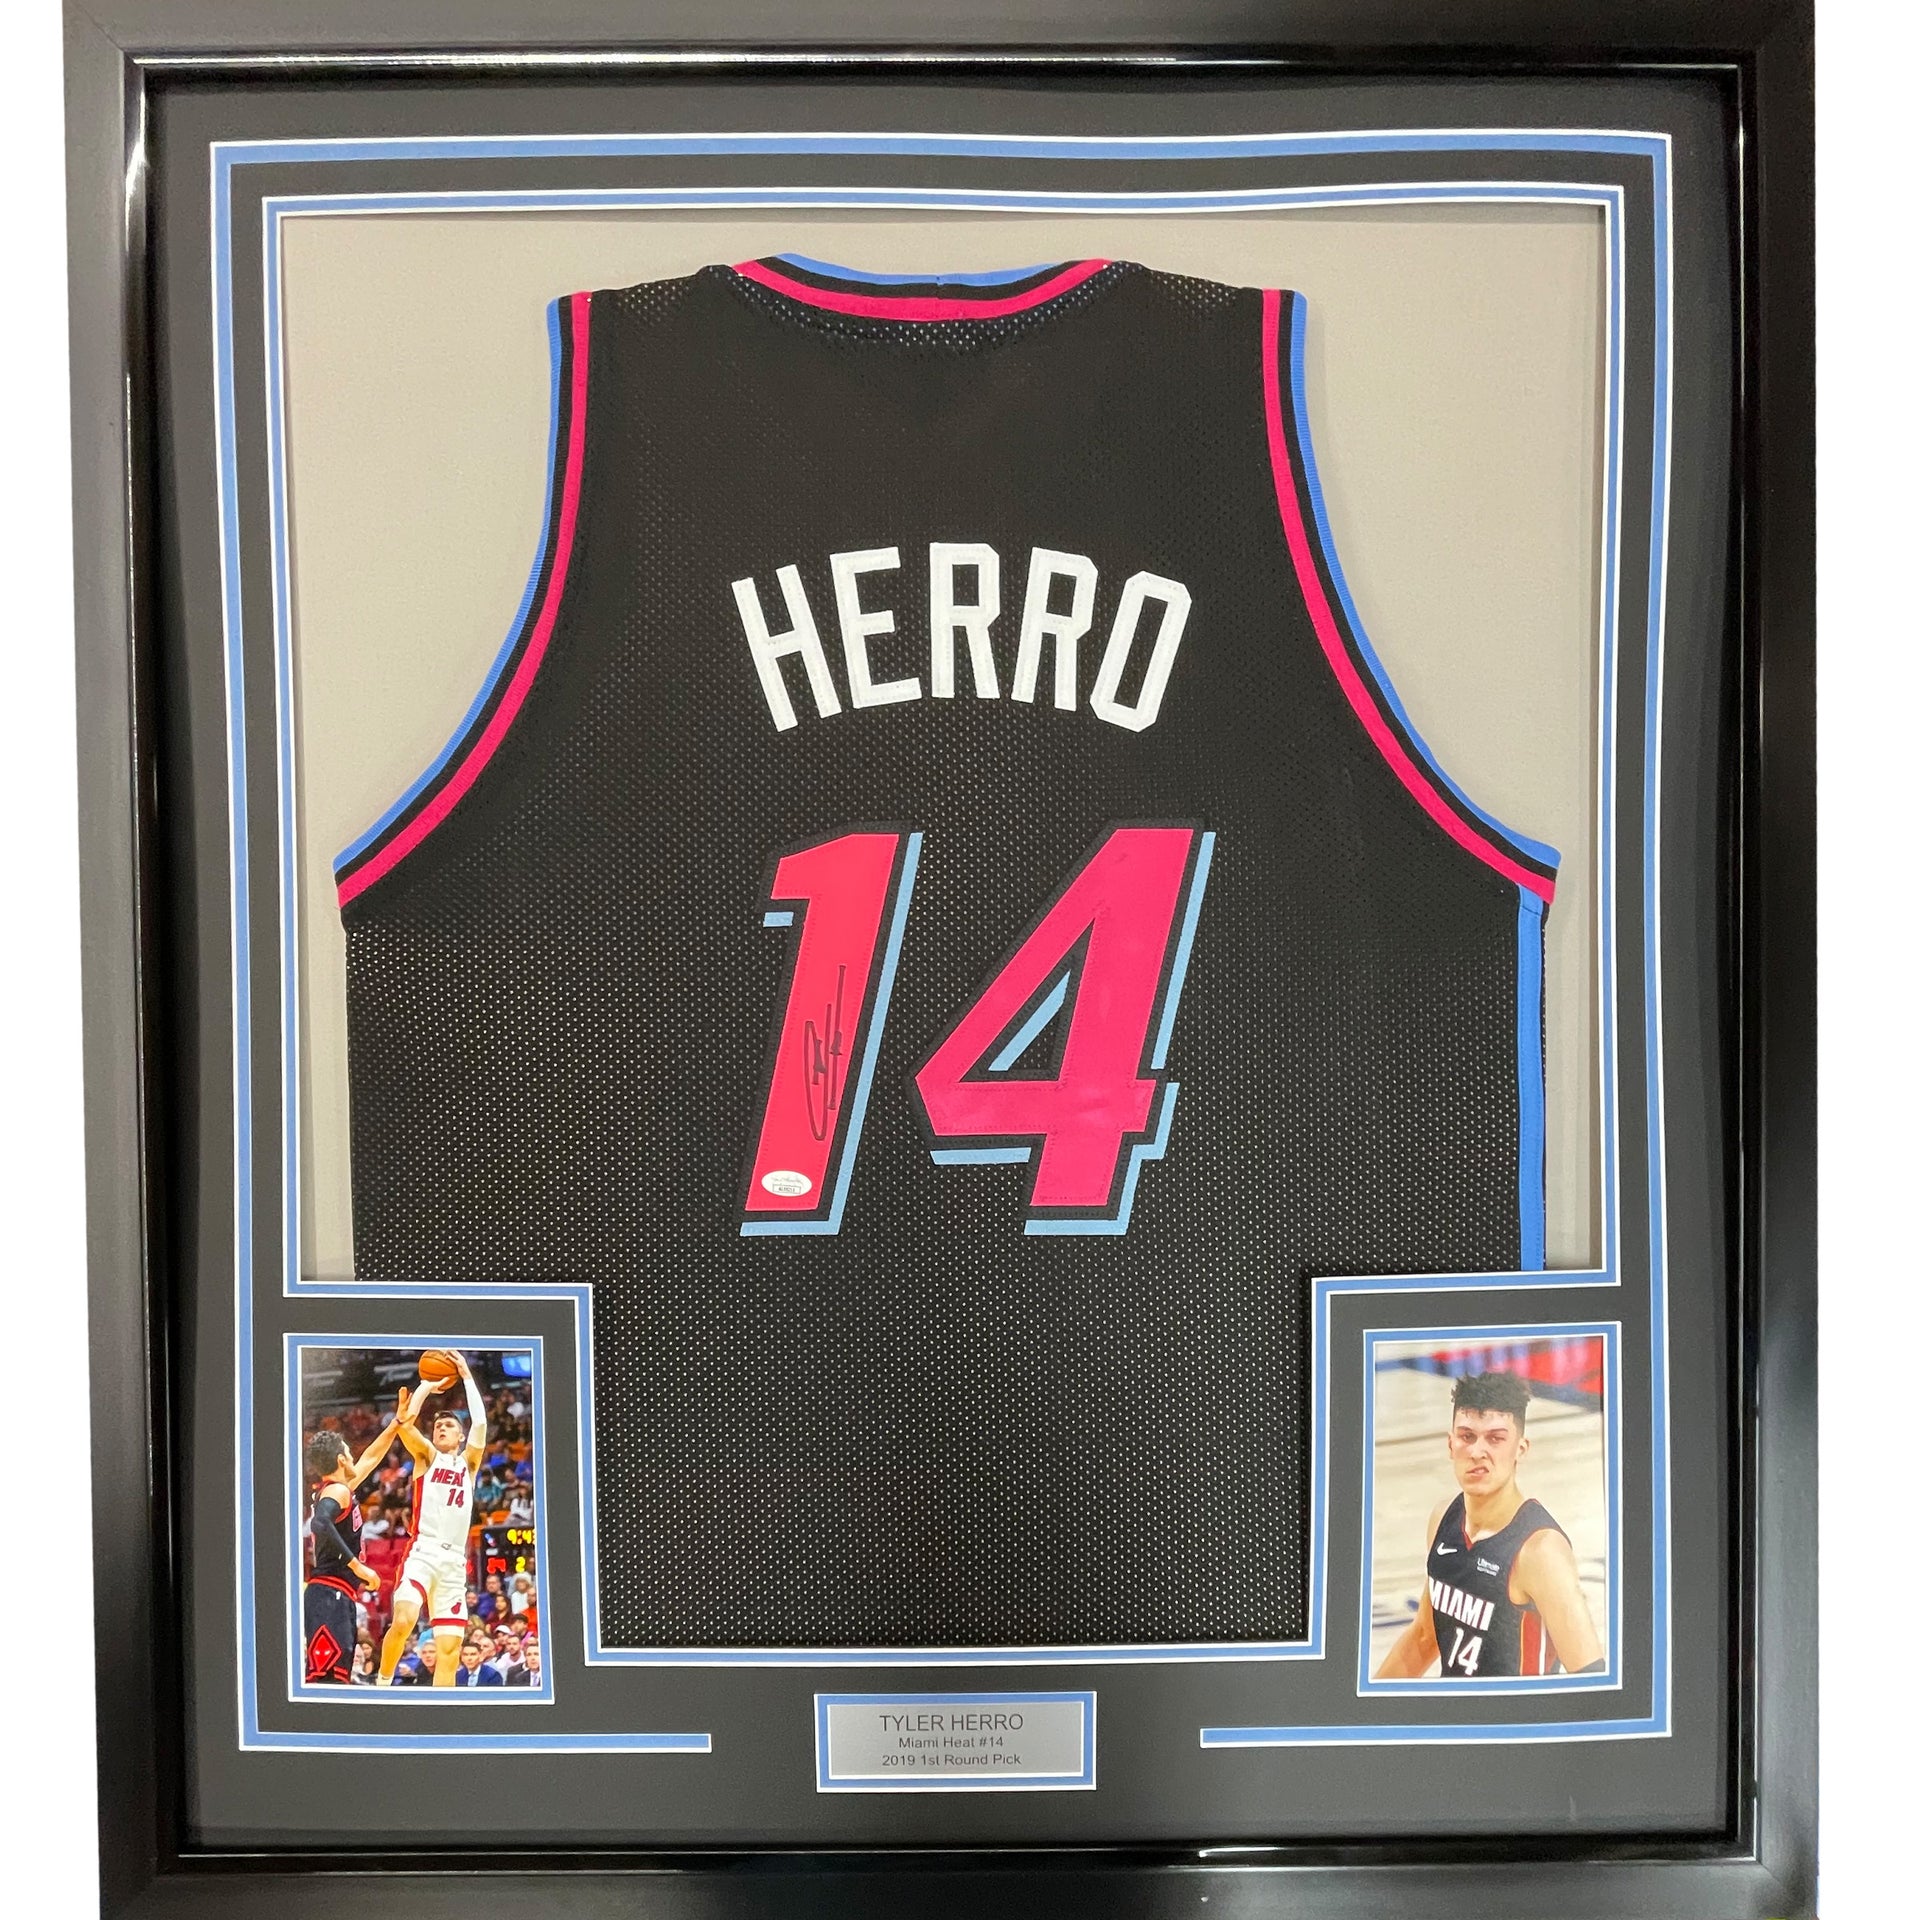 Framed Autographed/Signed Tyler Herro 33x42 Miami Black Vice City  Basketball Jersey JSA COA - Hall of Fame Sports Memorabilia